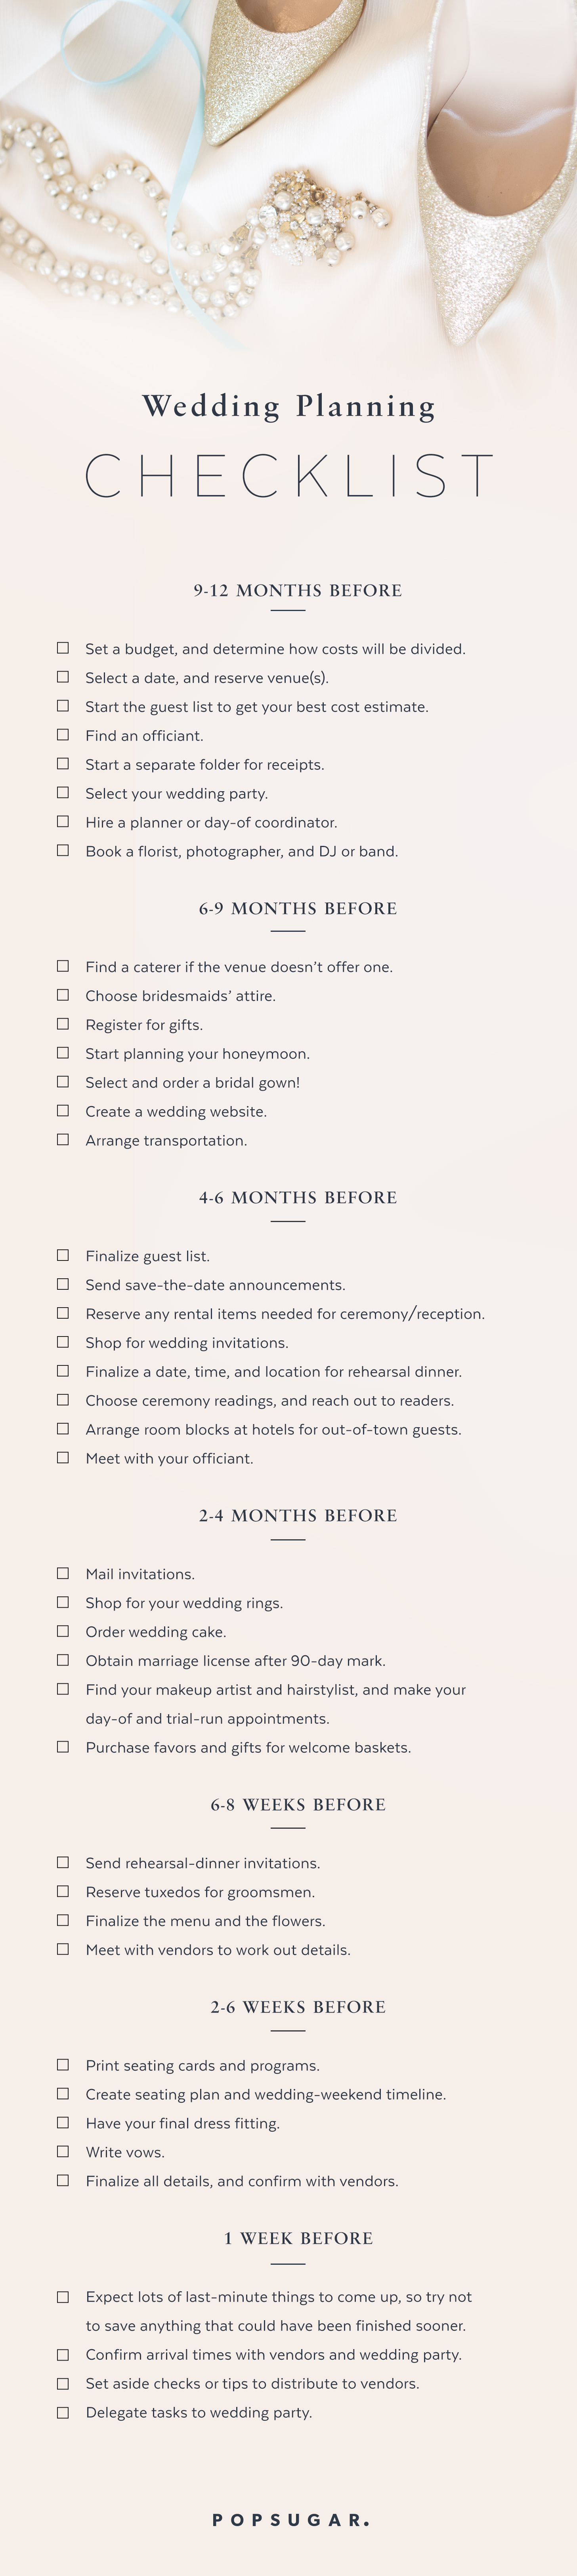 estate planning checklist married couple